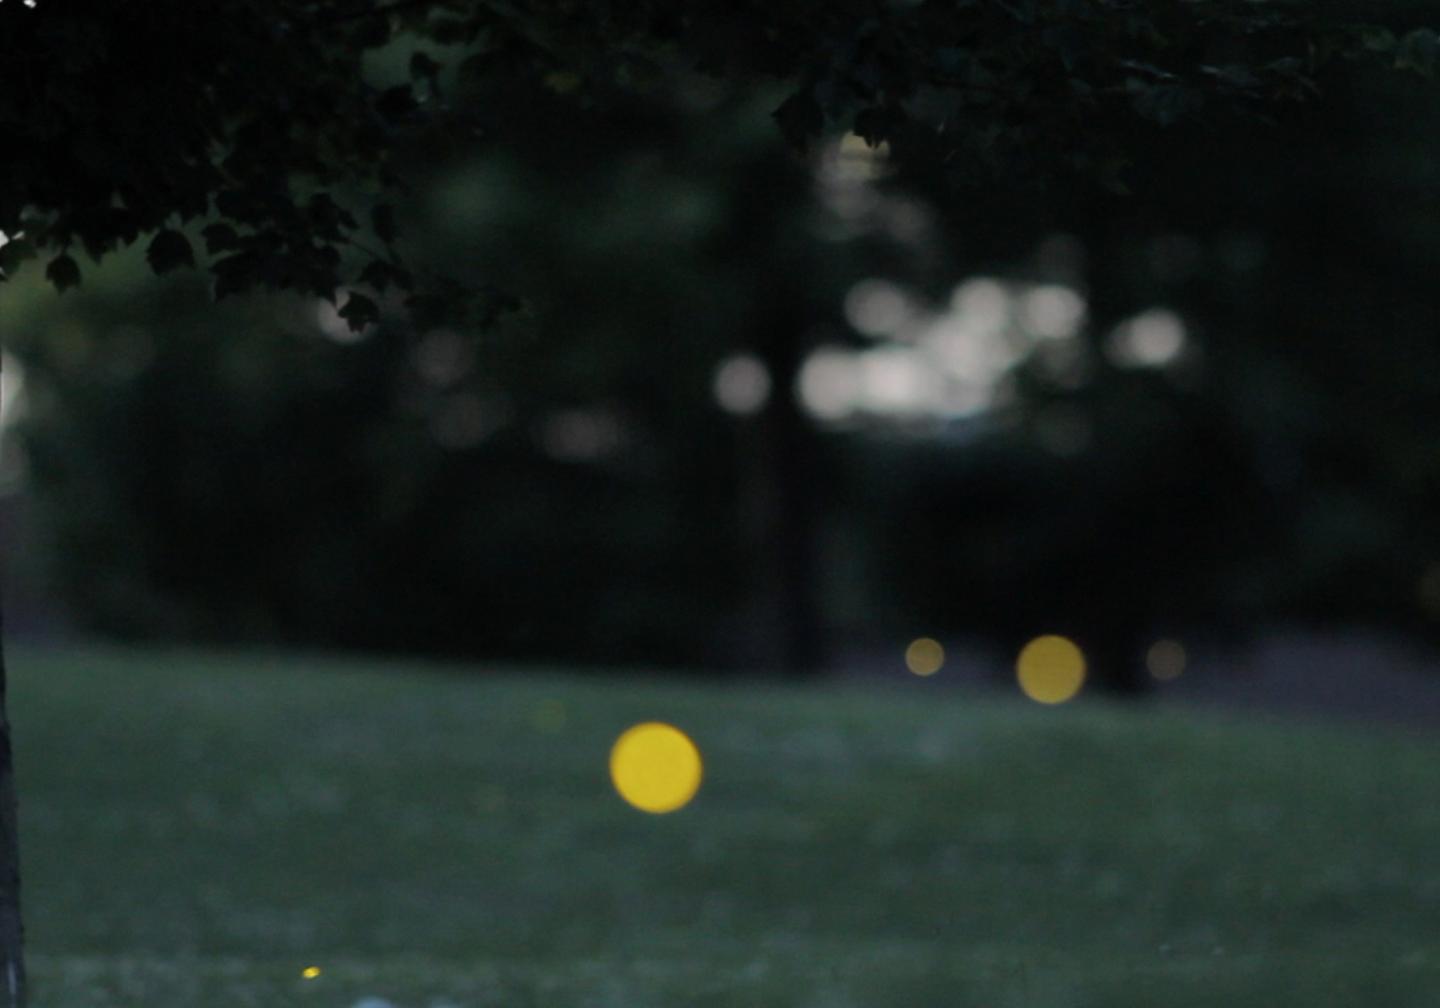 How Do Fireflies Glow?